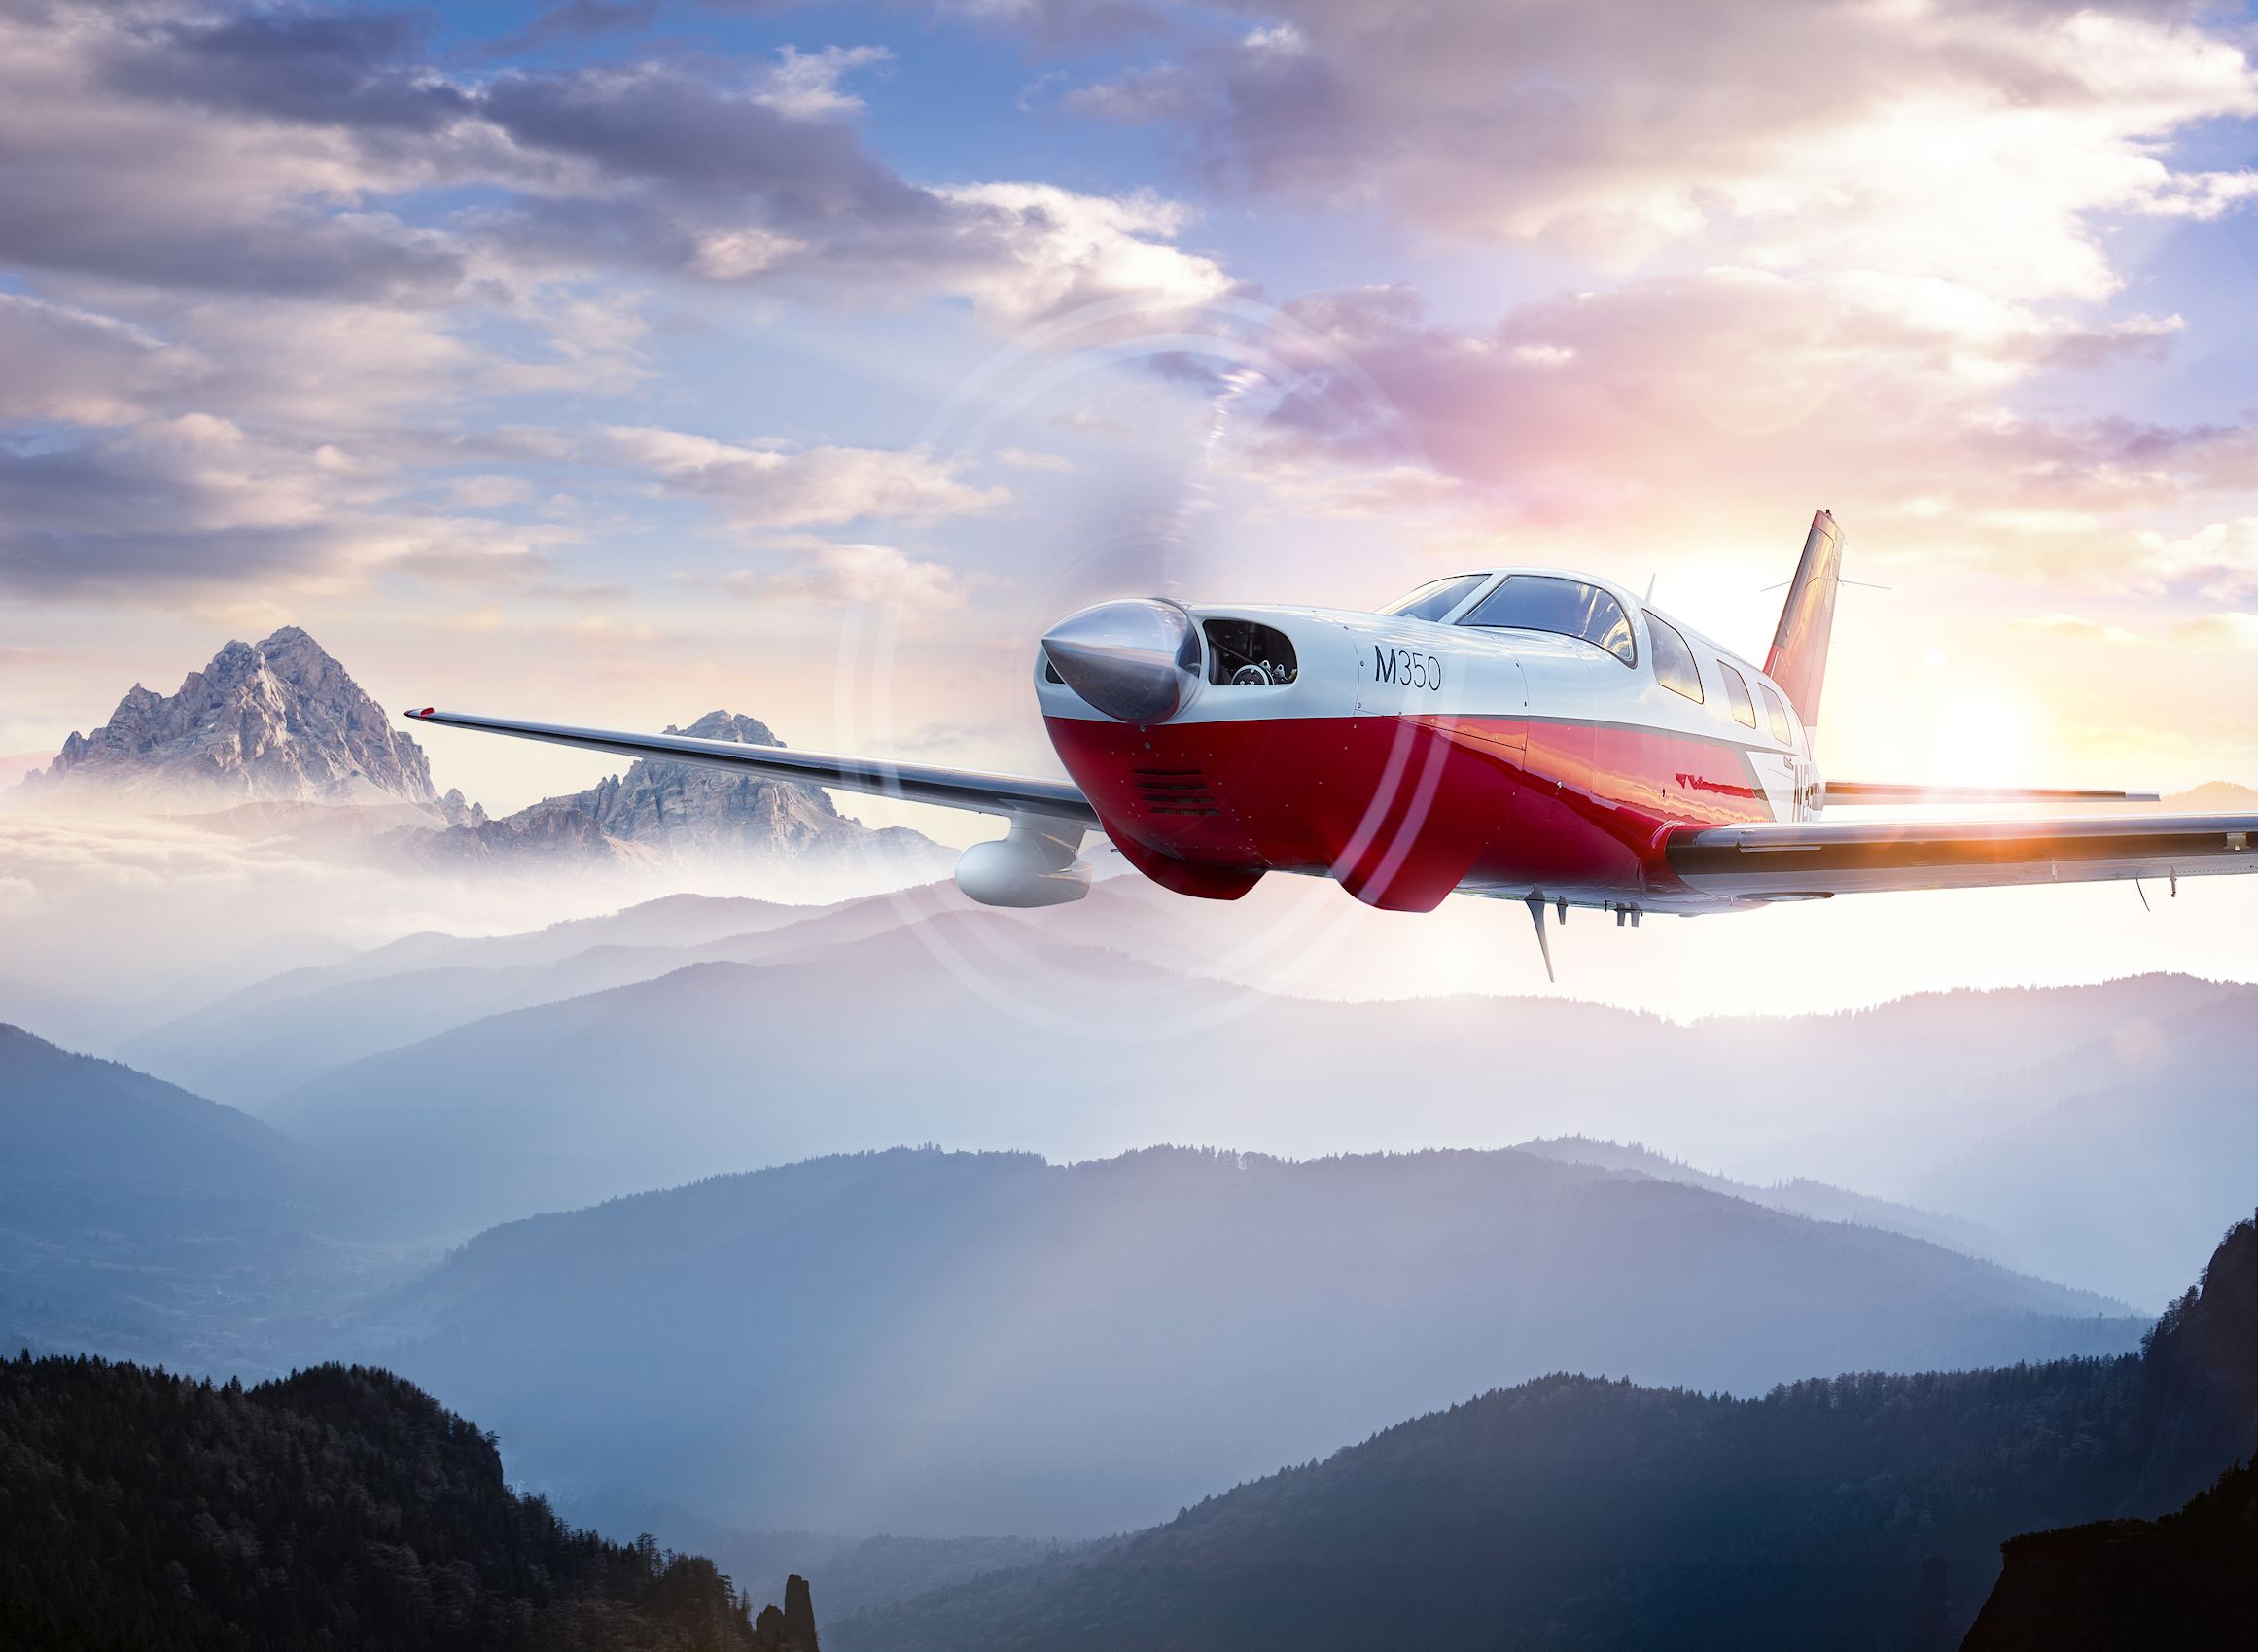 New Piper M350 Turbocharged Piston Engine Aeroplane For Sale